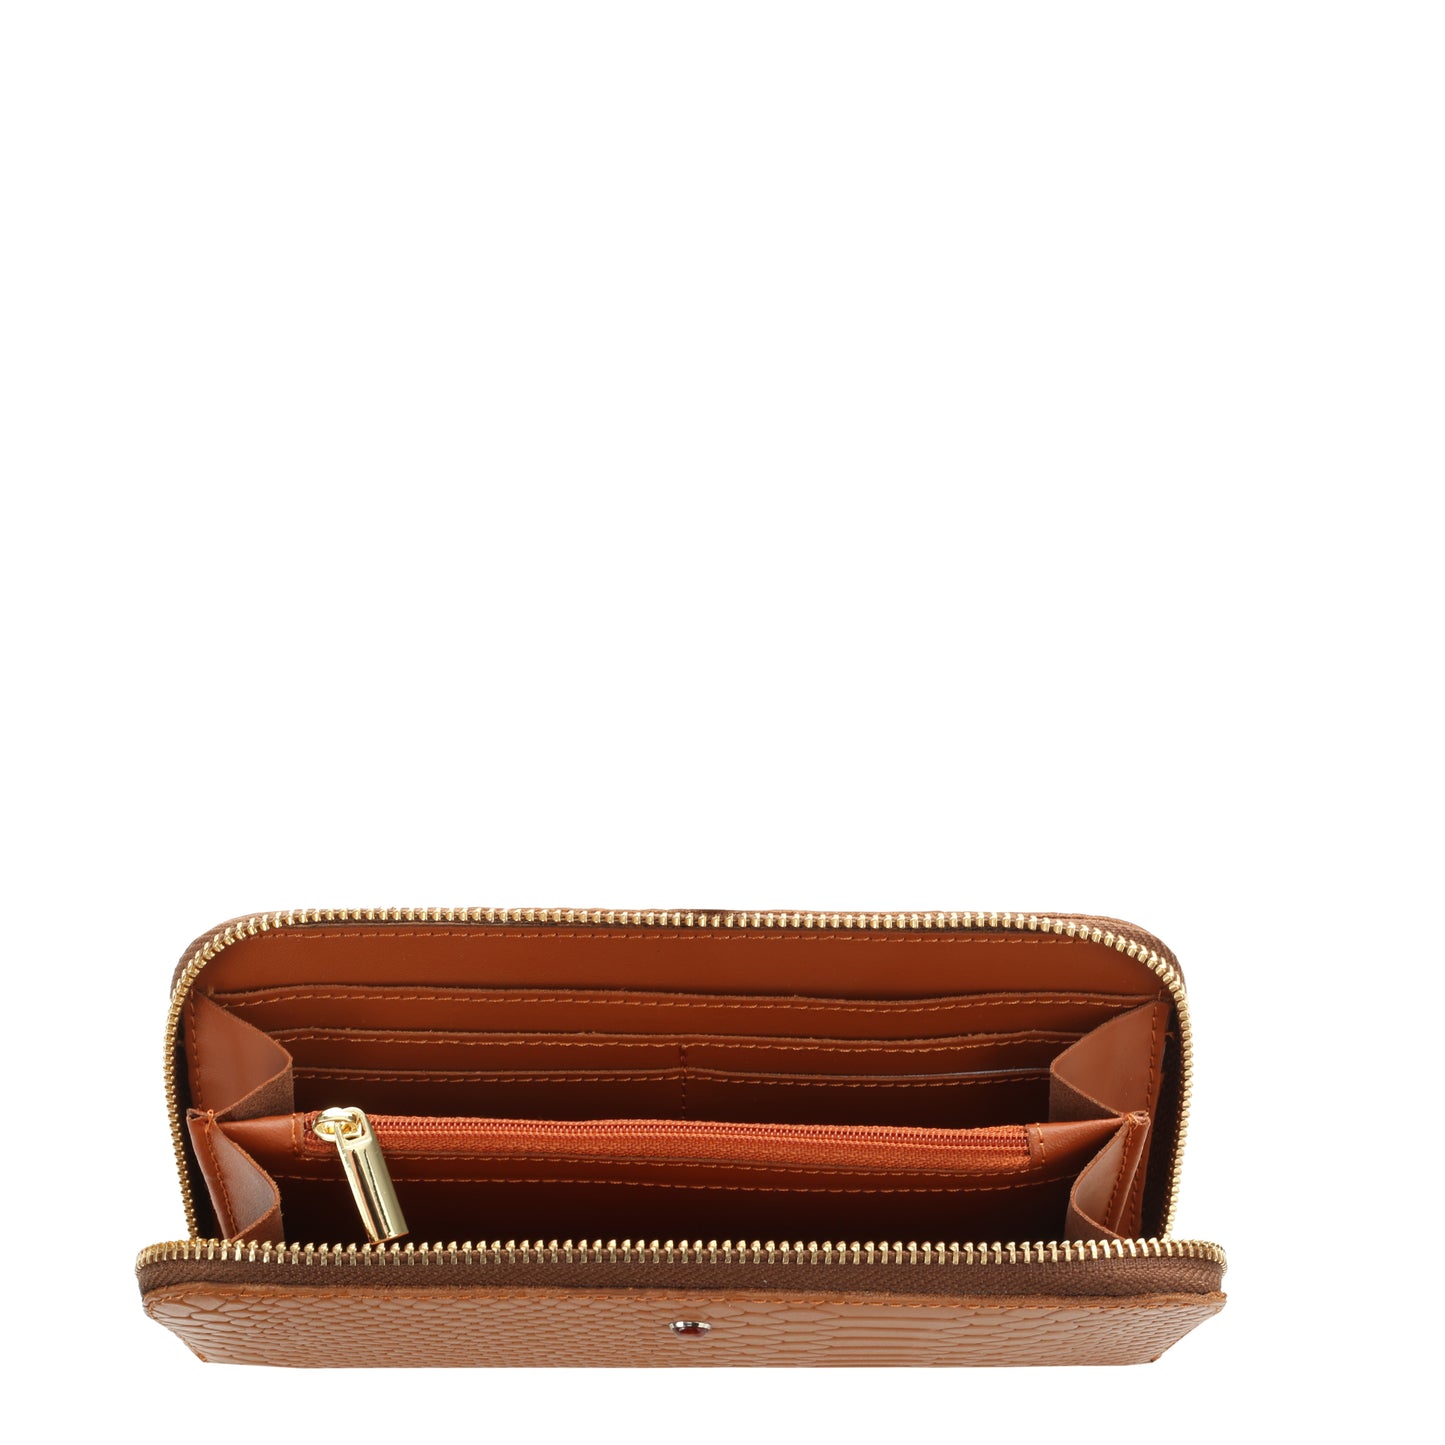 Women's cognac leather wallet